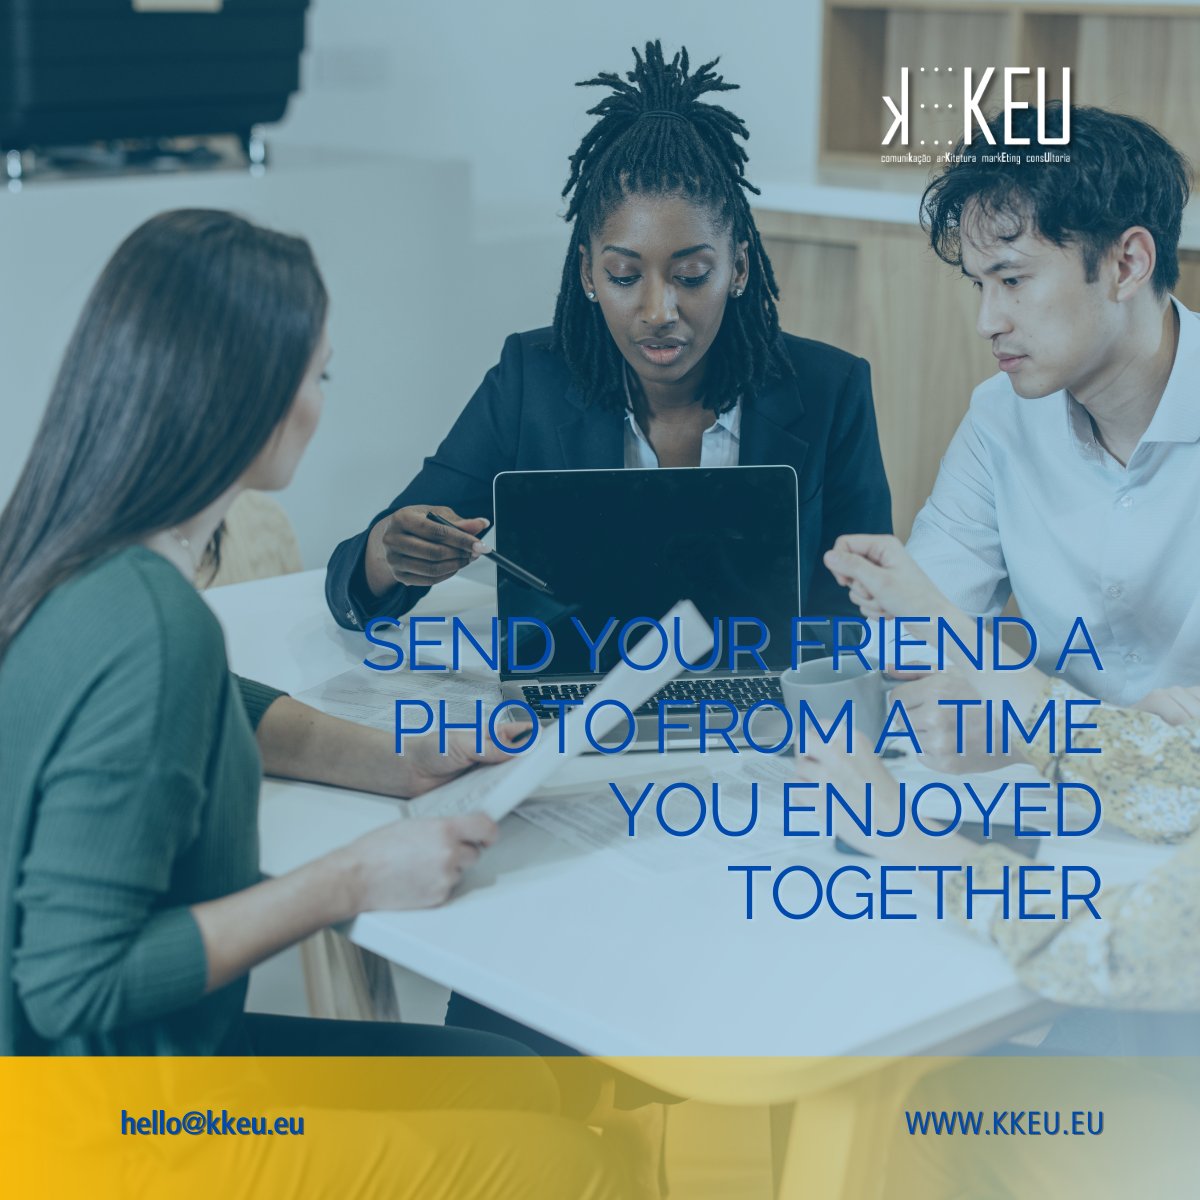 #kkeu #1PositiveActionDay
A Positive Action Day😀 #Participate and Click on #Bio👈🙋😀
#DigitalCommunication #Architecture #DigitalMarketing #Consulting
#happier #kinder #together #happy
@eumarketingpt @zezealmeida.pt @smartphotographerpt